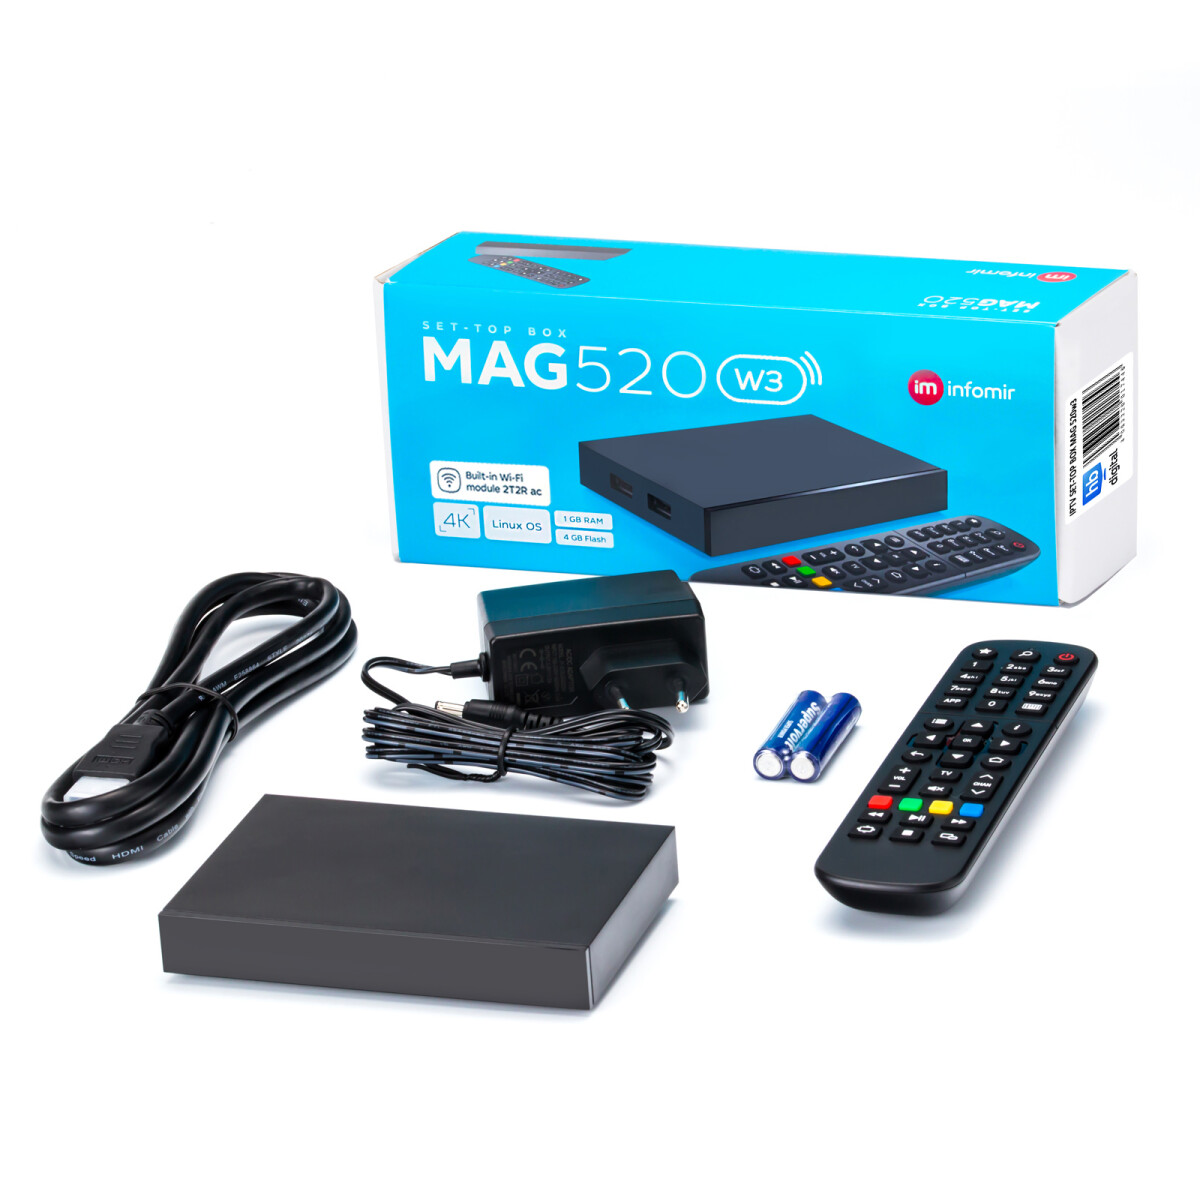 Anvendt Mus format Refurbished MAG 520w3 IPTV Set Top Box mit 4K support Wi-Fi integrated,  84,90 €